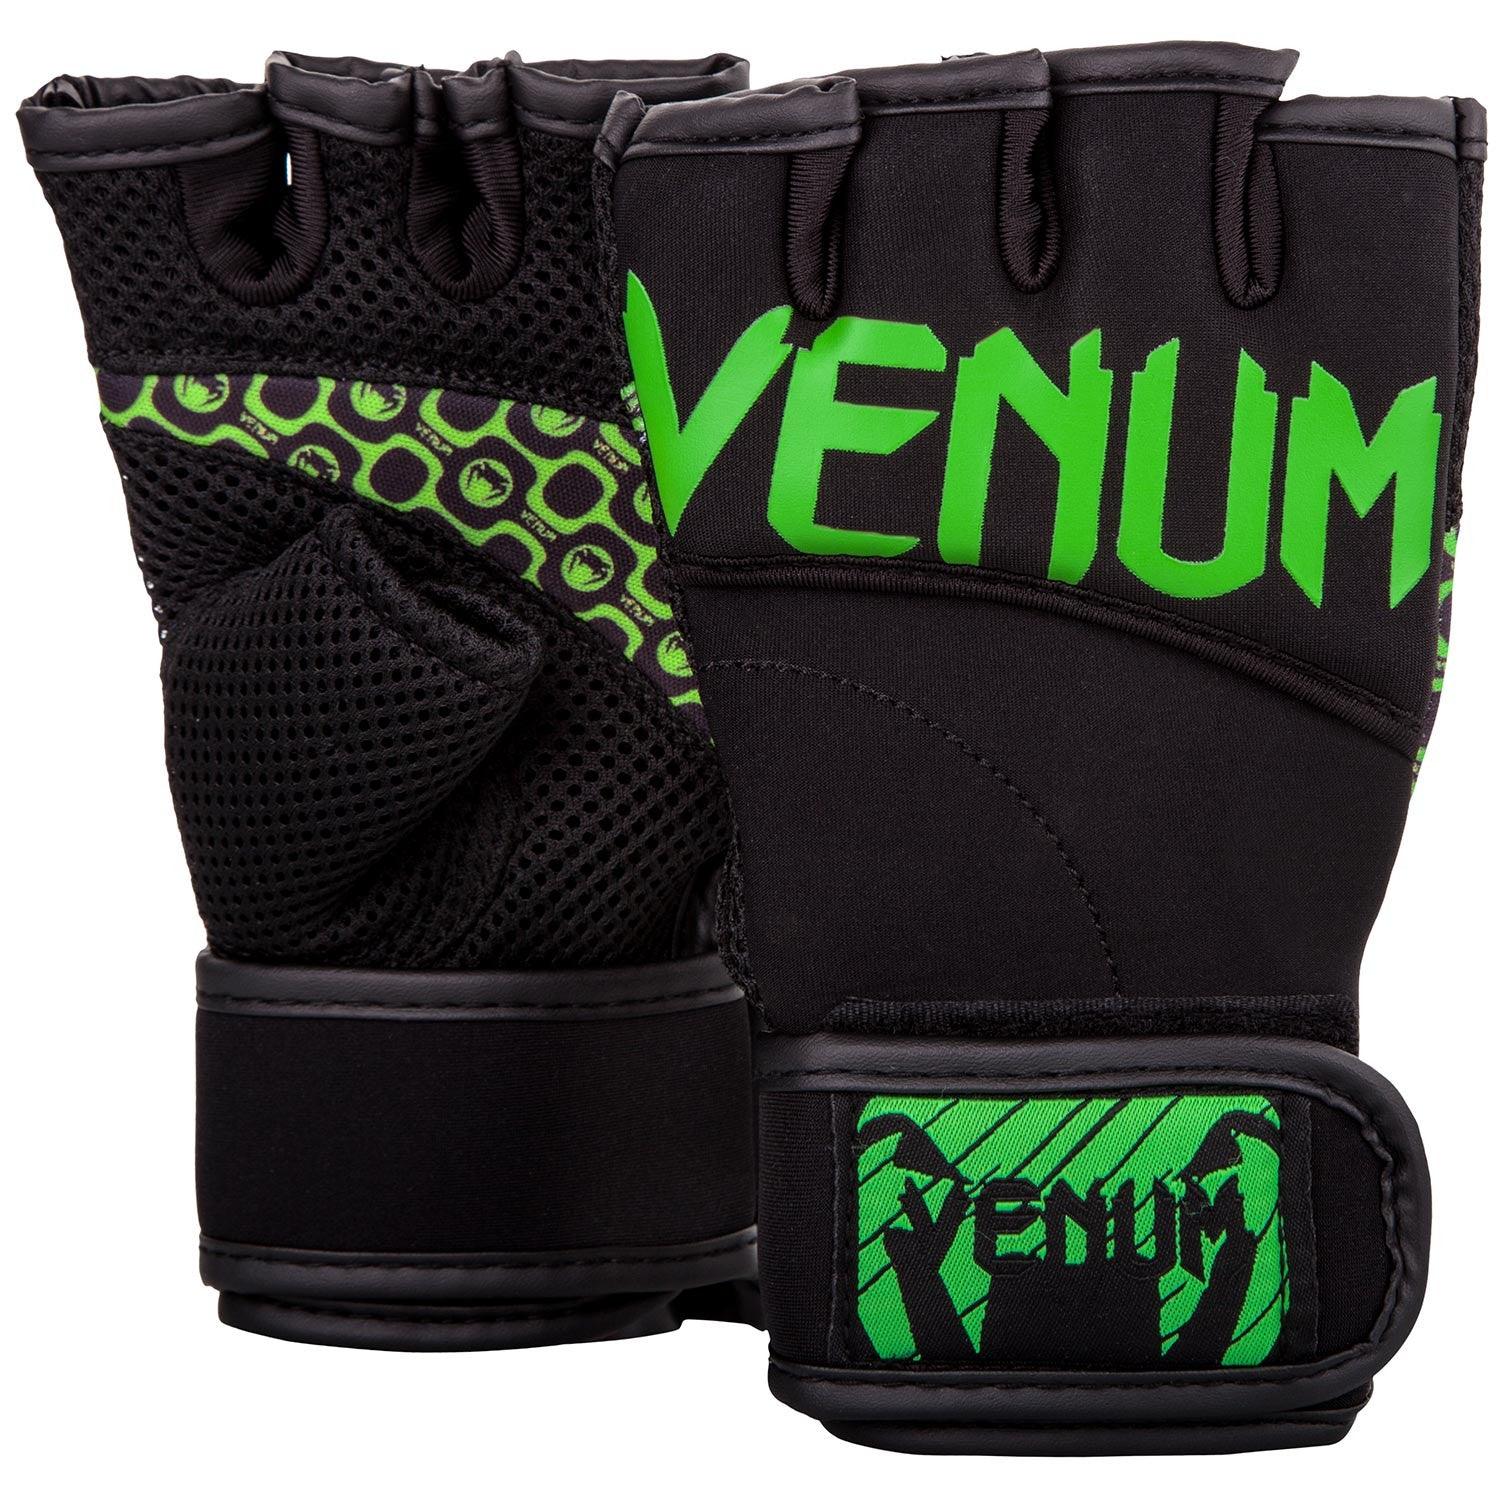 Venum Aero Body Fitness Gloves - Black/Neo Yellow Picture 1